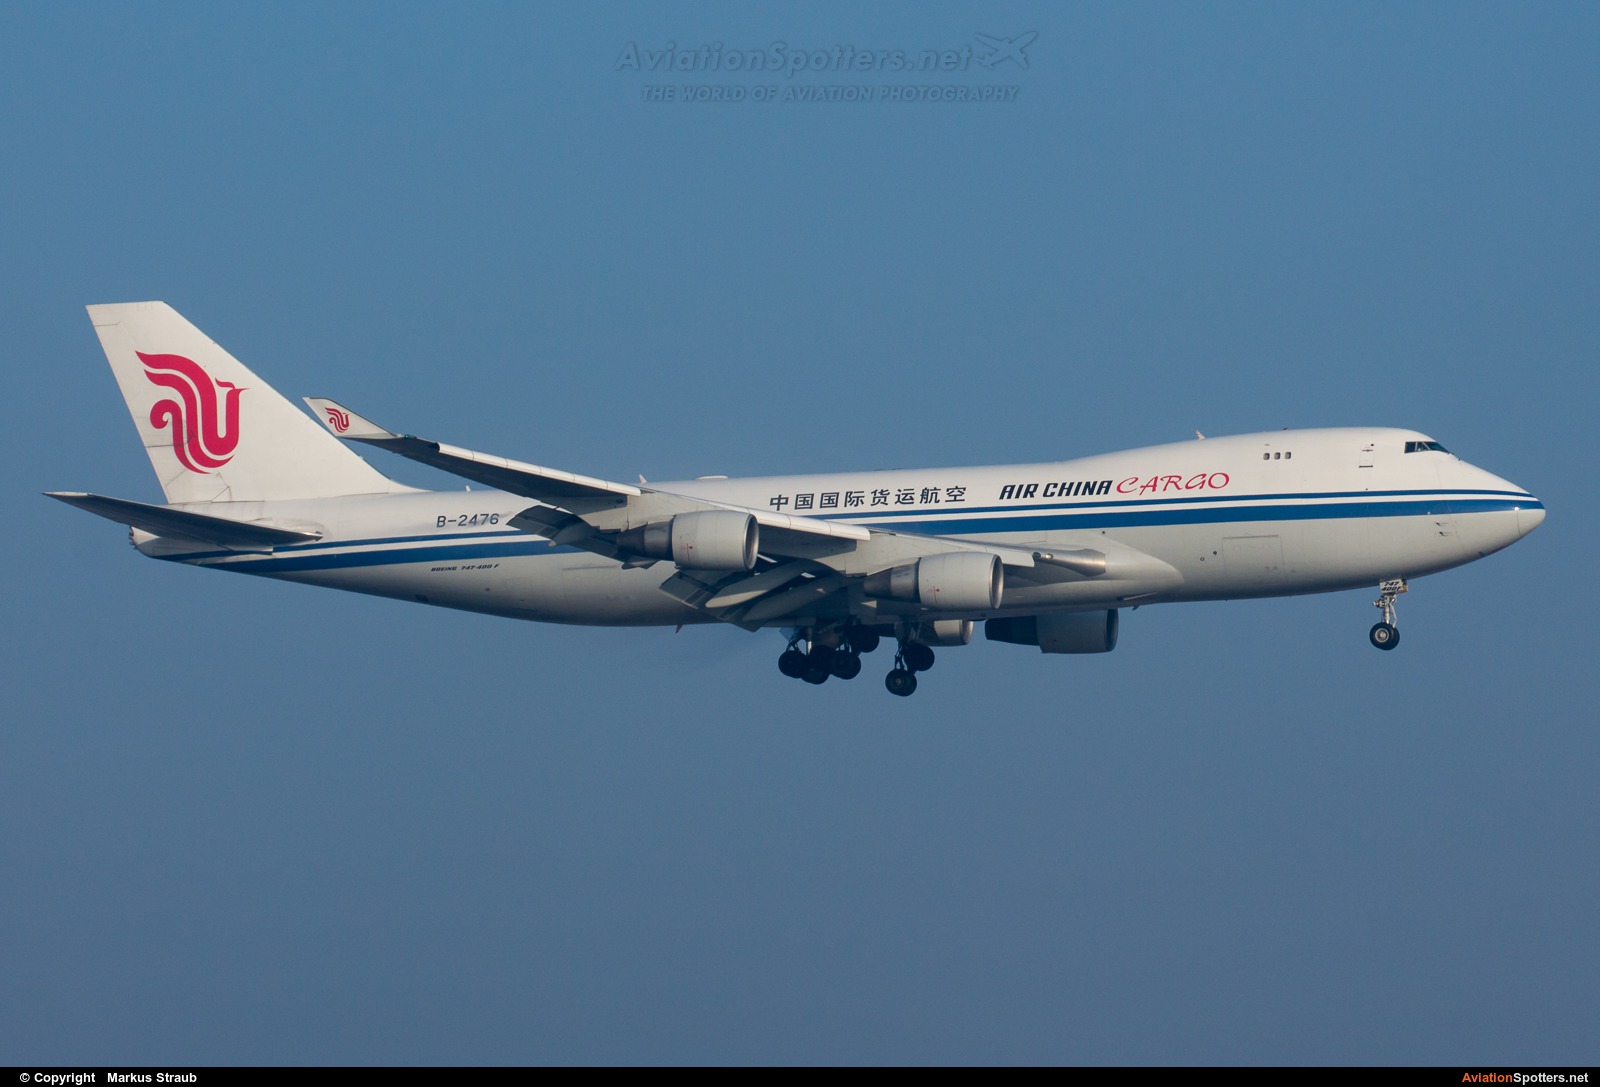 Air China Cargo  -  747-400F  (B-2476) By Markus Straub  (spottermarkus)